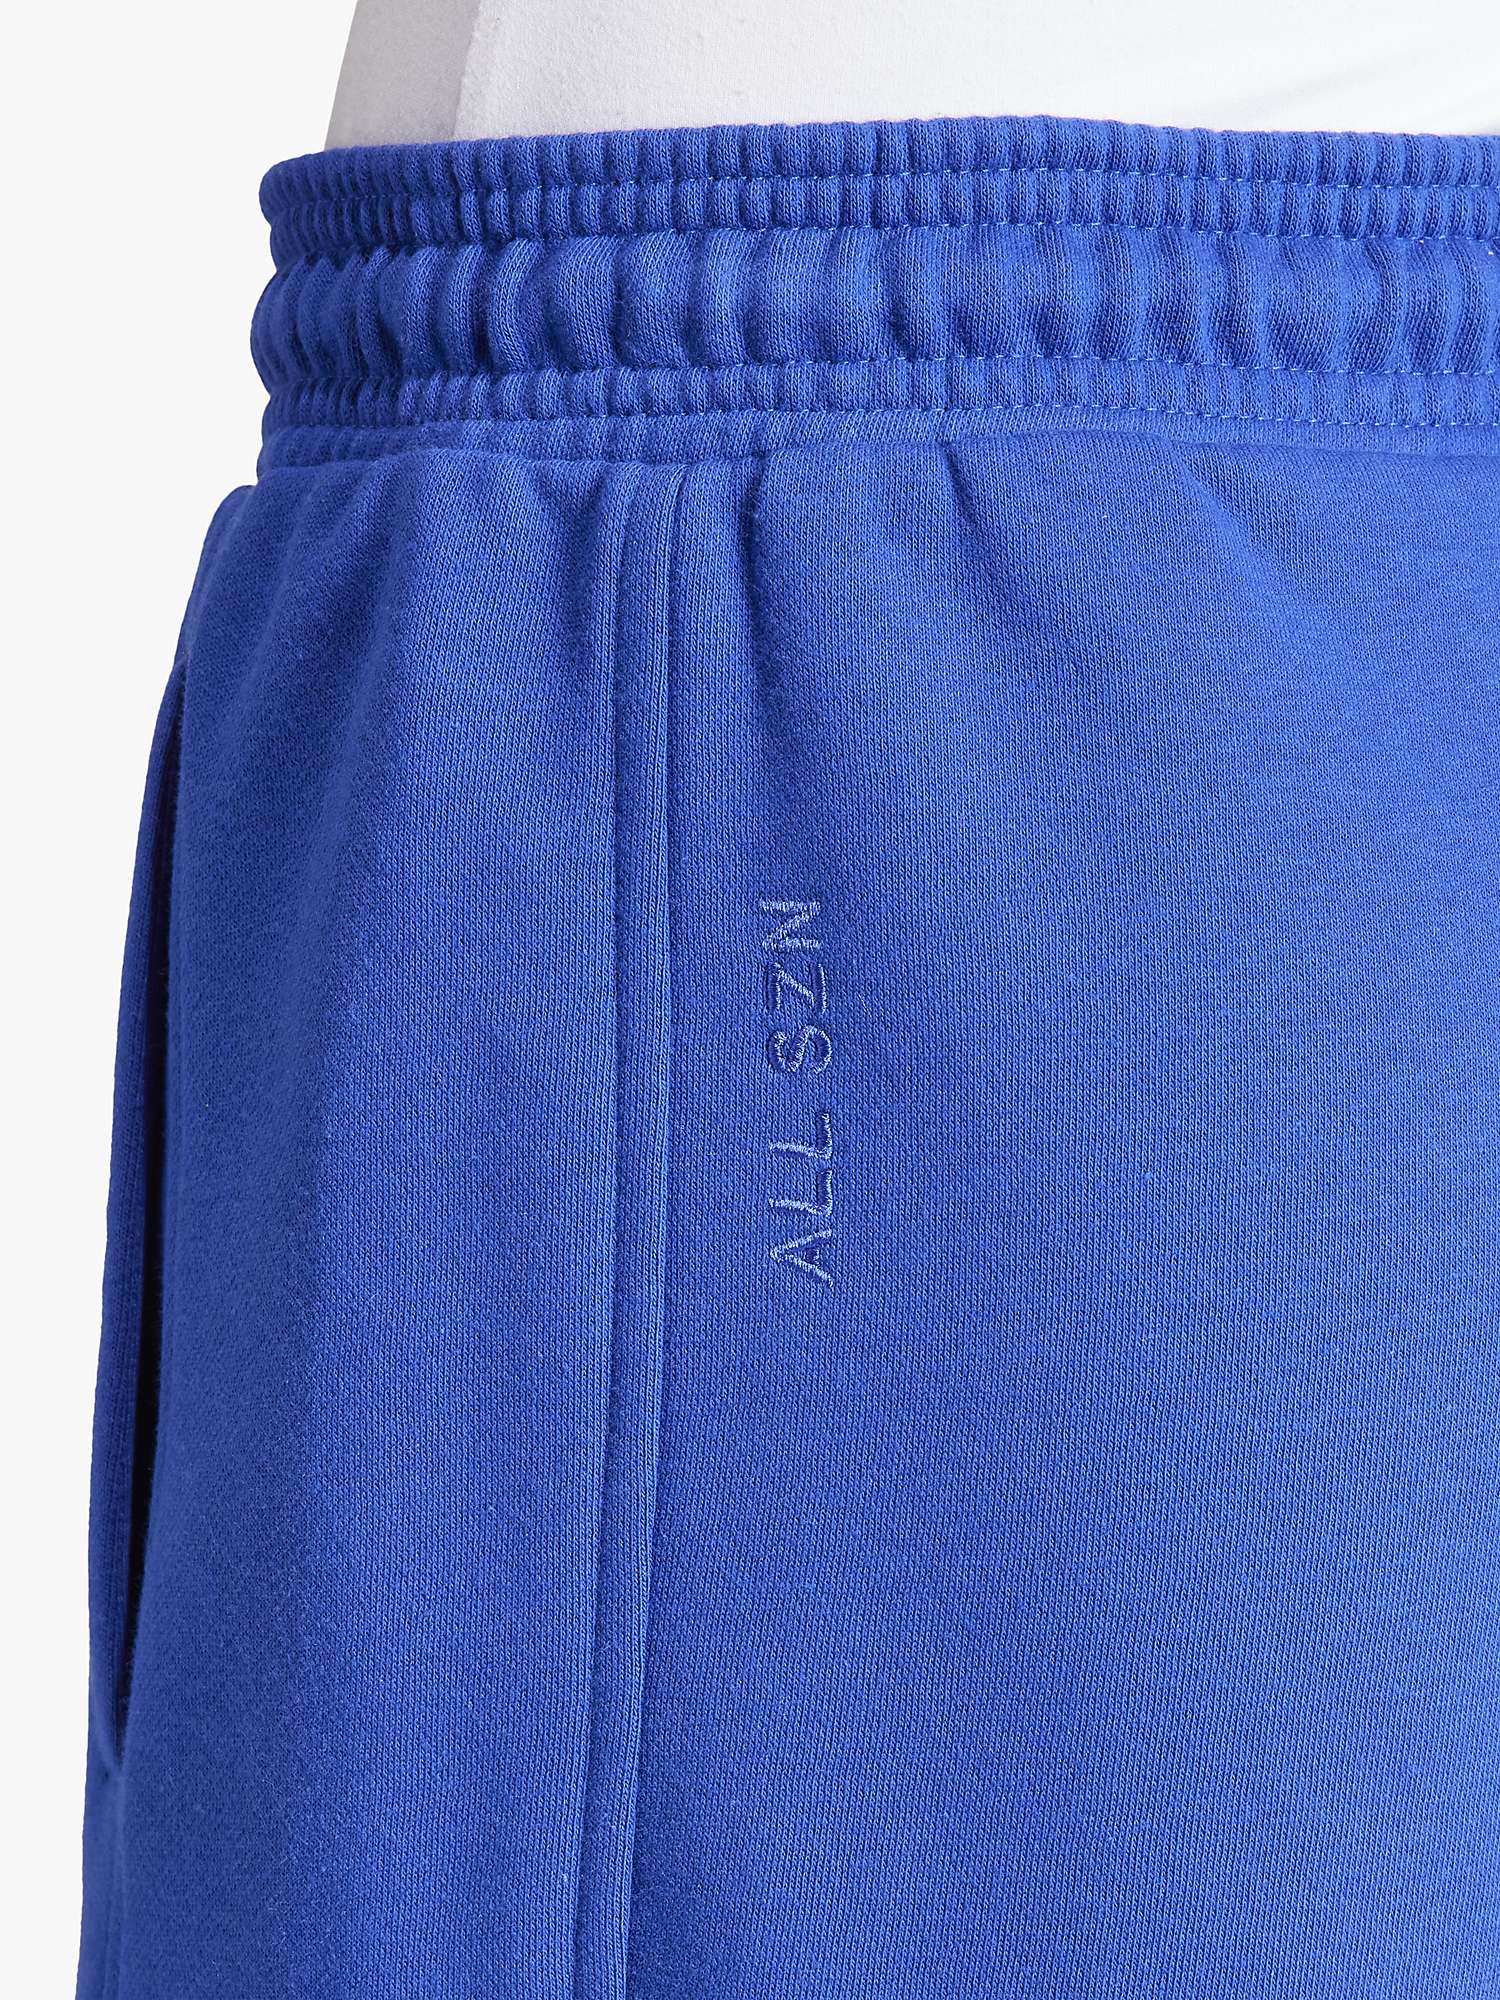 Buy adidas ALL SZN Women's Loose Fit Fleece Joggers, Blue Cobalt Online at johnlewis.com